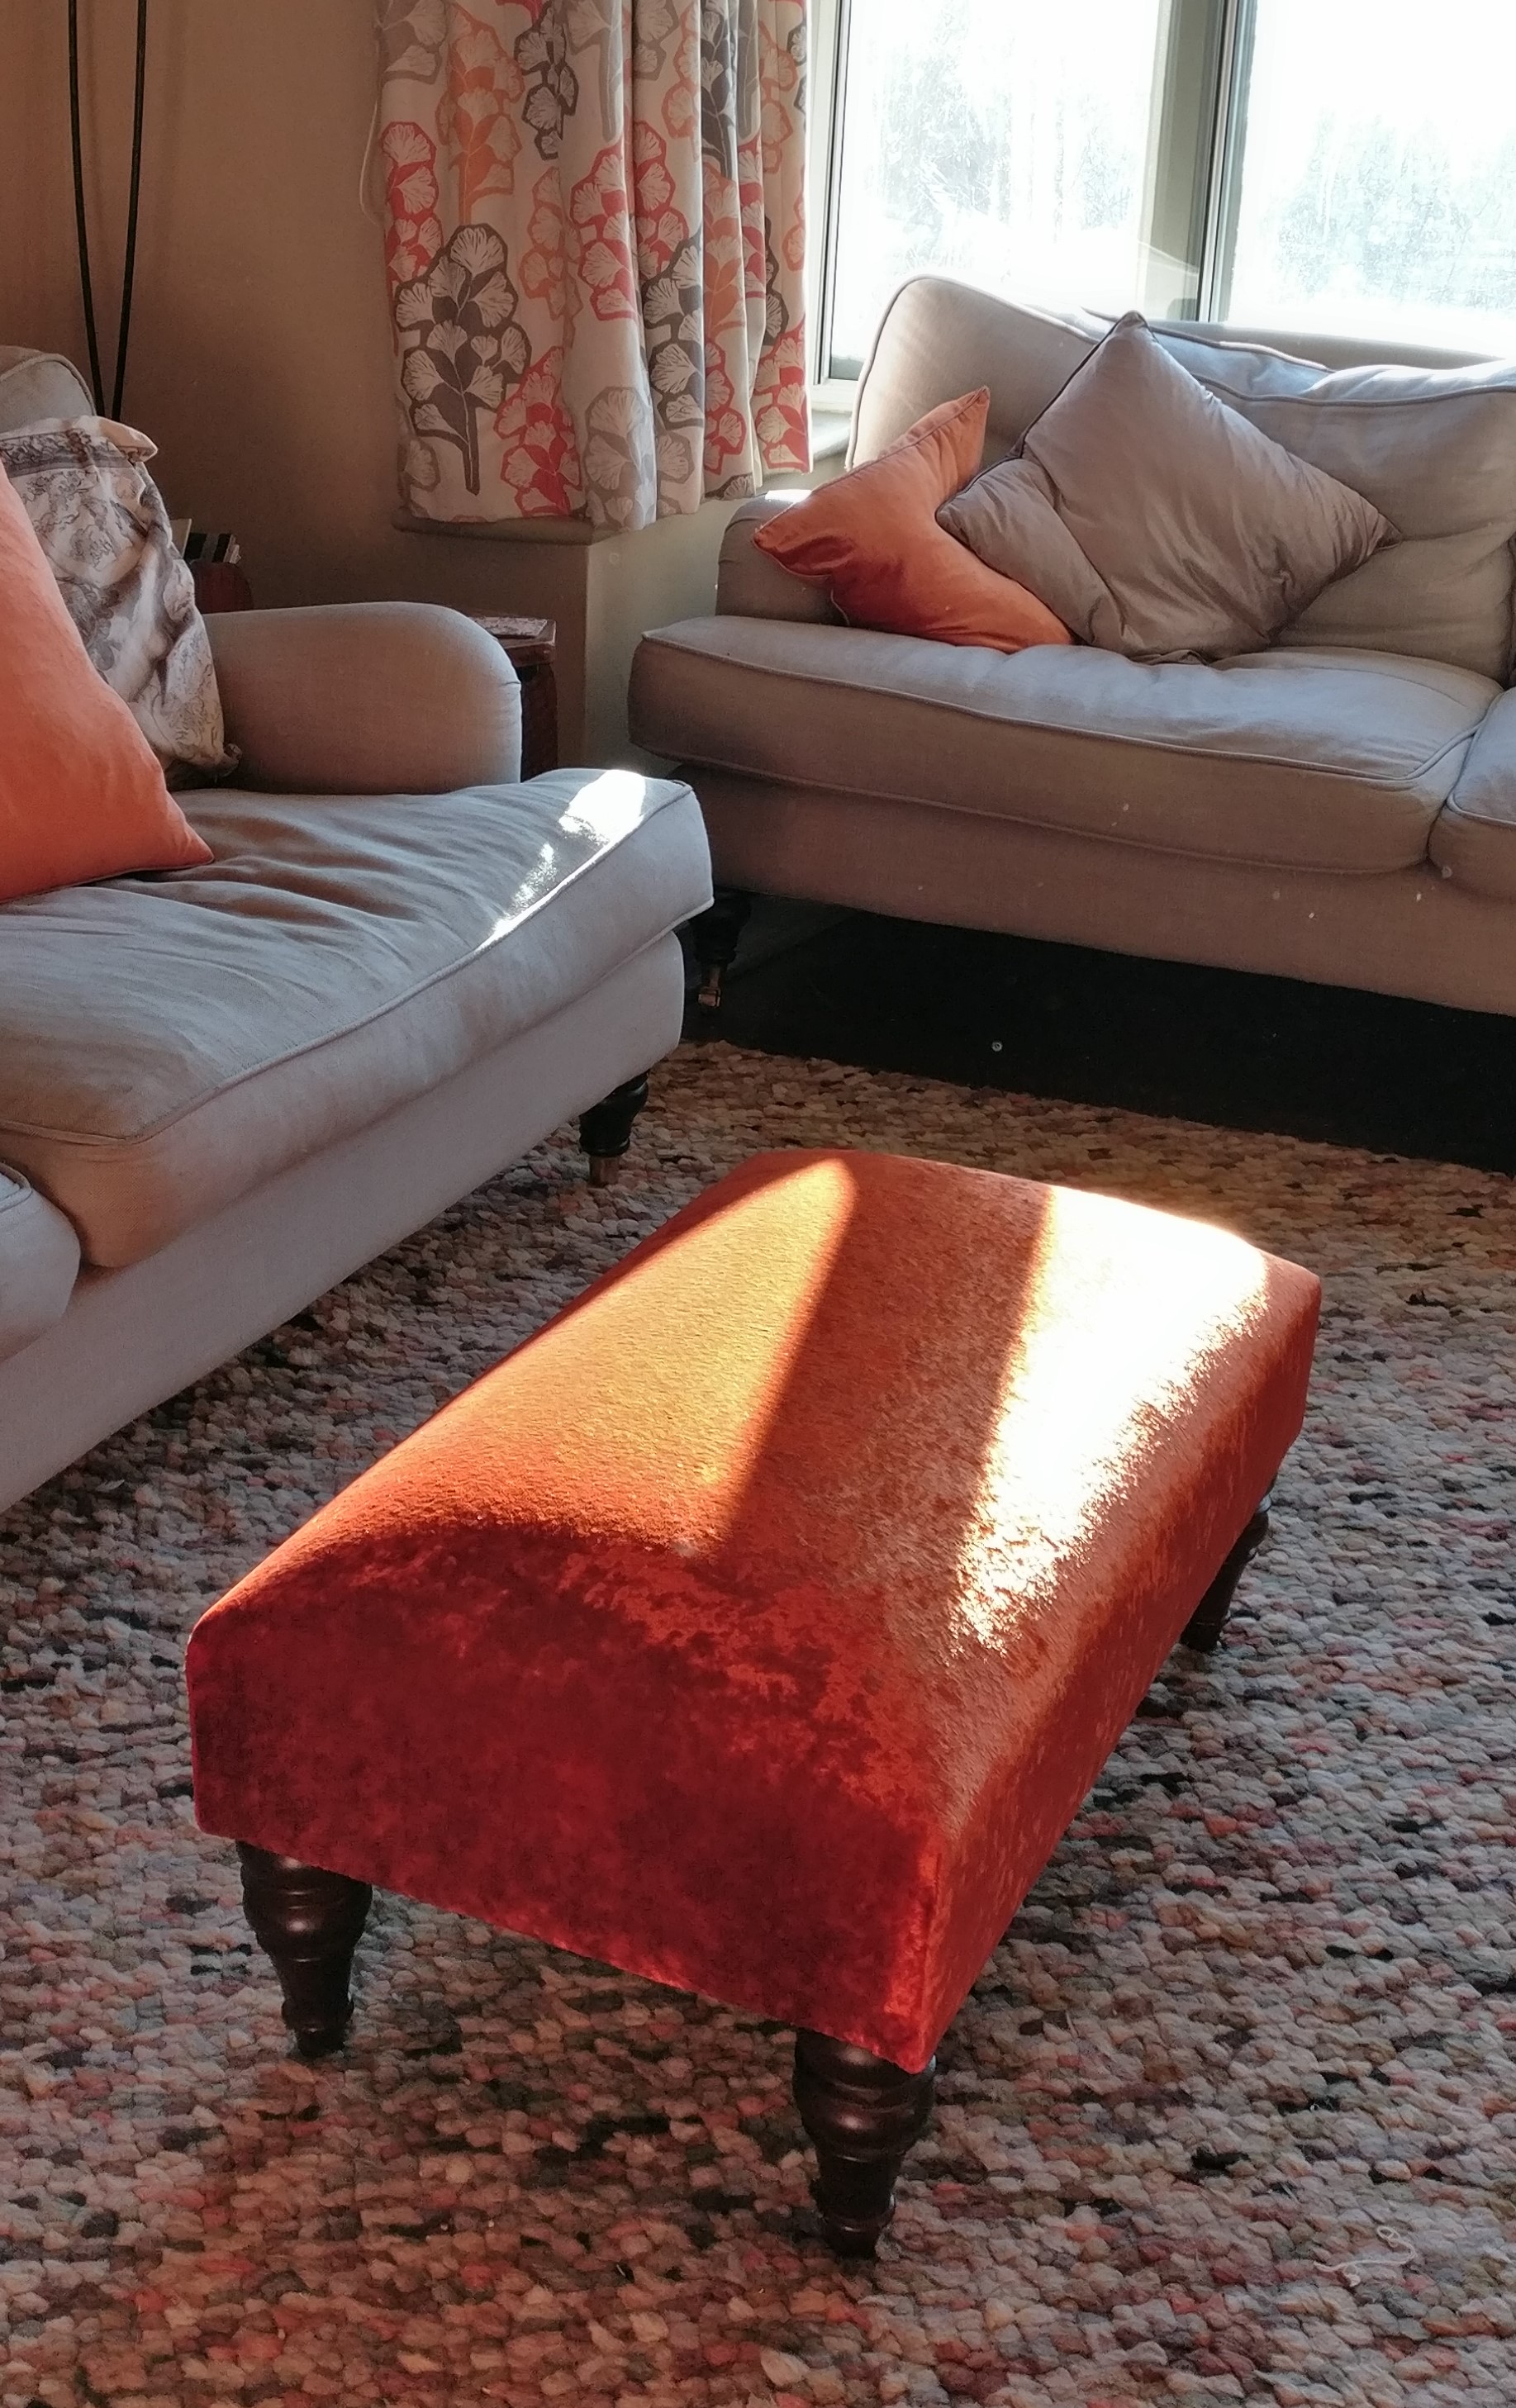 Grist & Twine Upholstery: Footstool reupholstered in orange crushed velvet